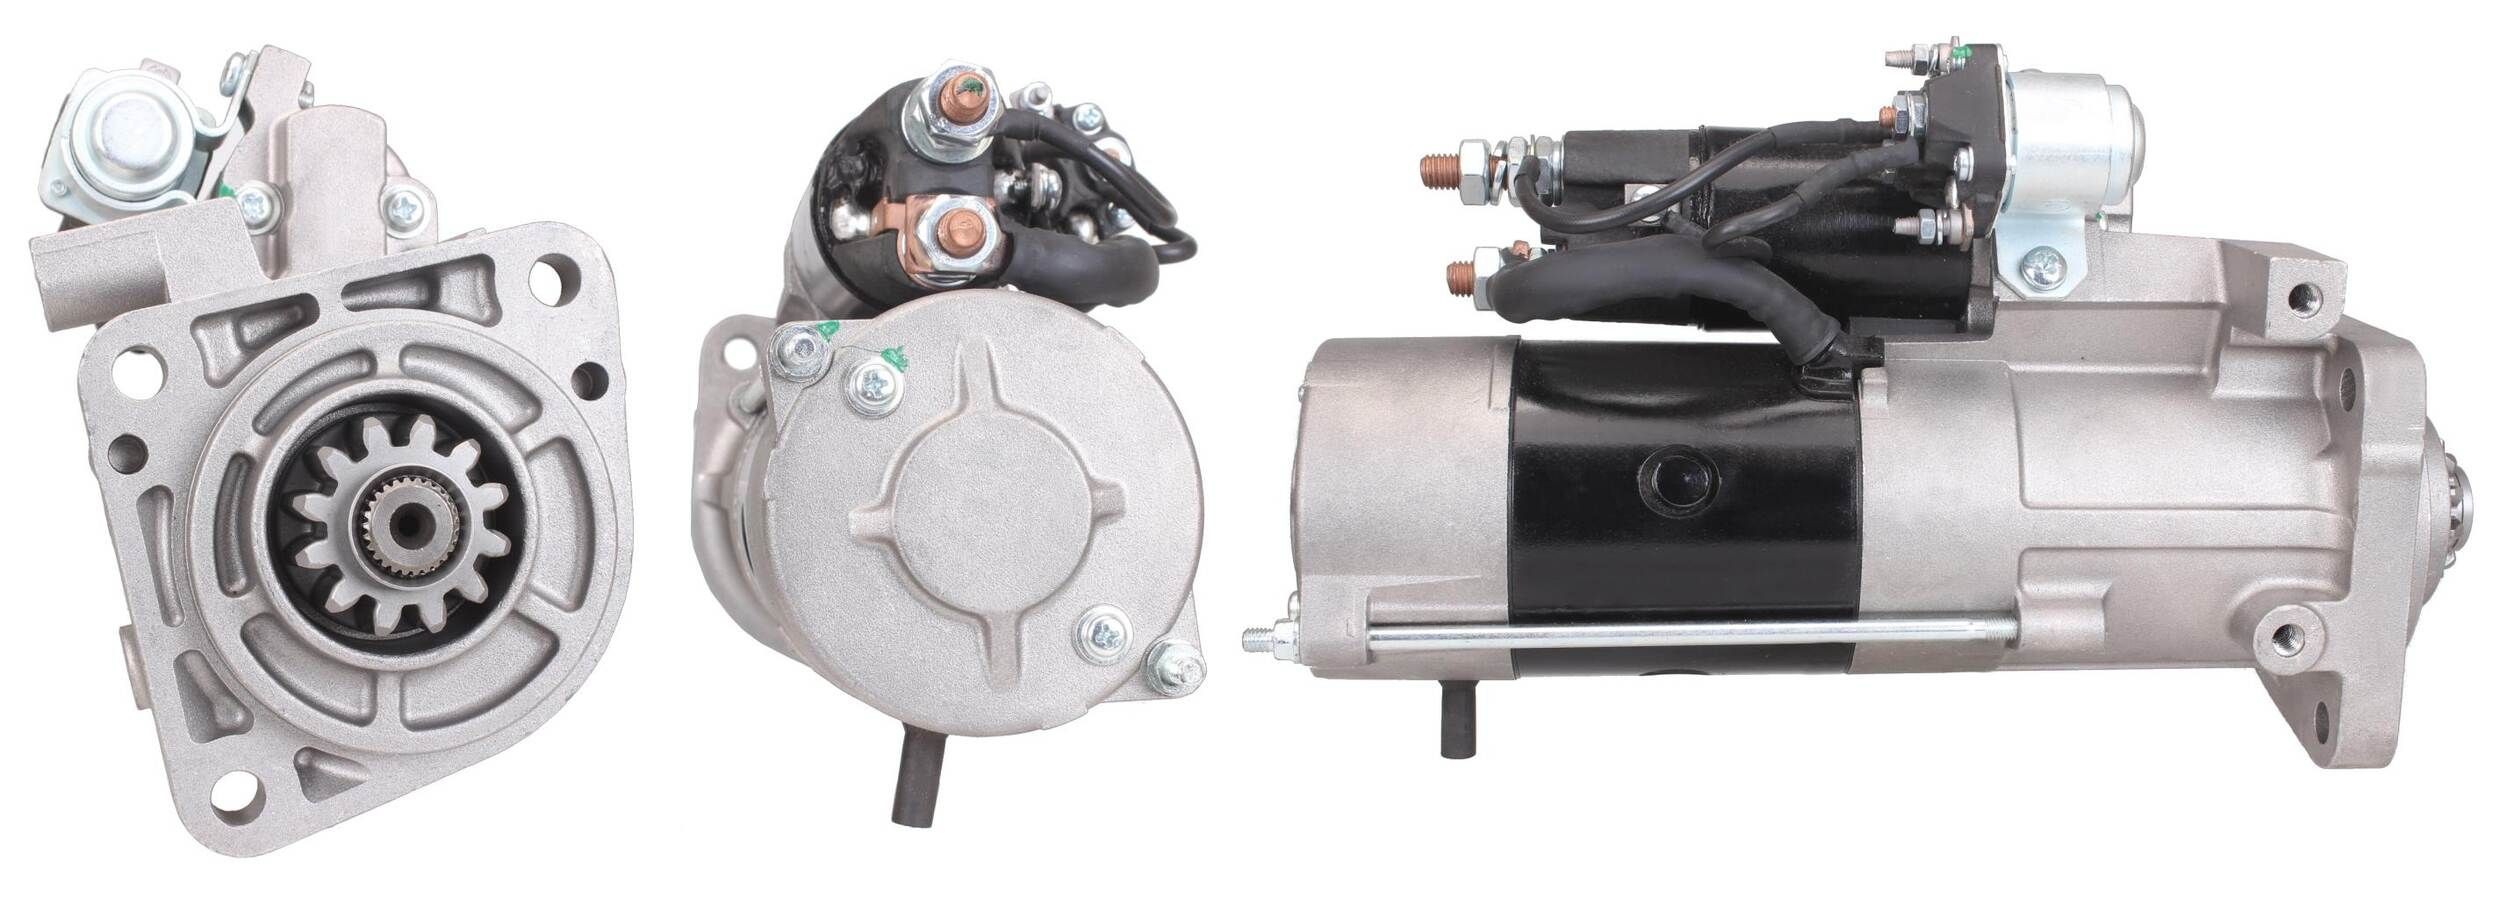 LUCAS LRS02599 Starter motor cheap in online store